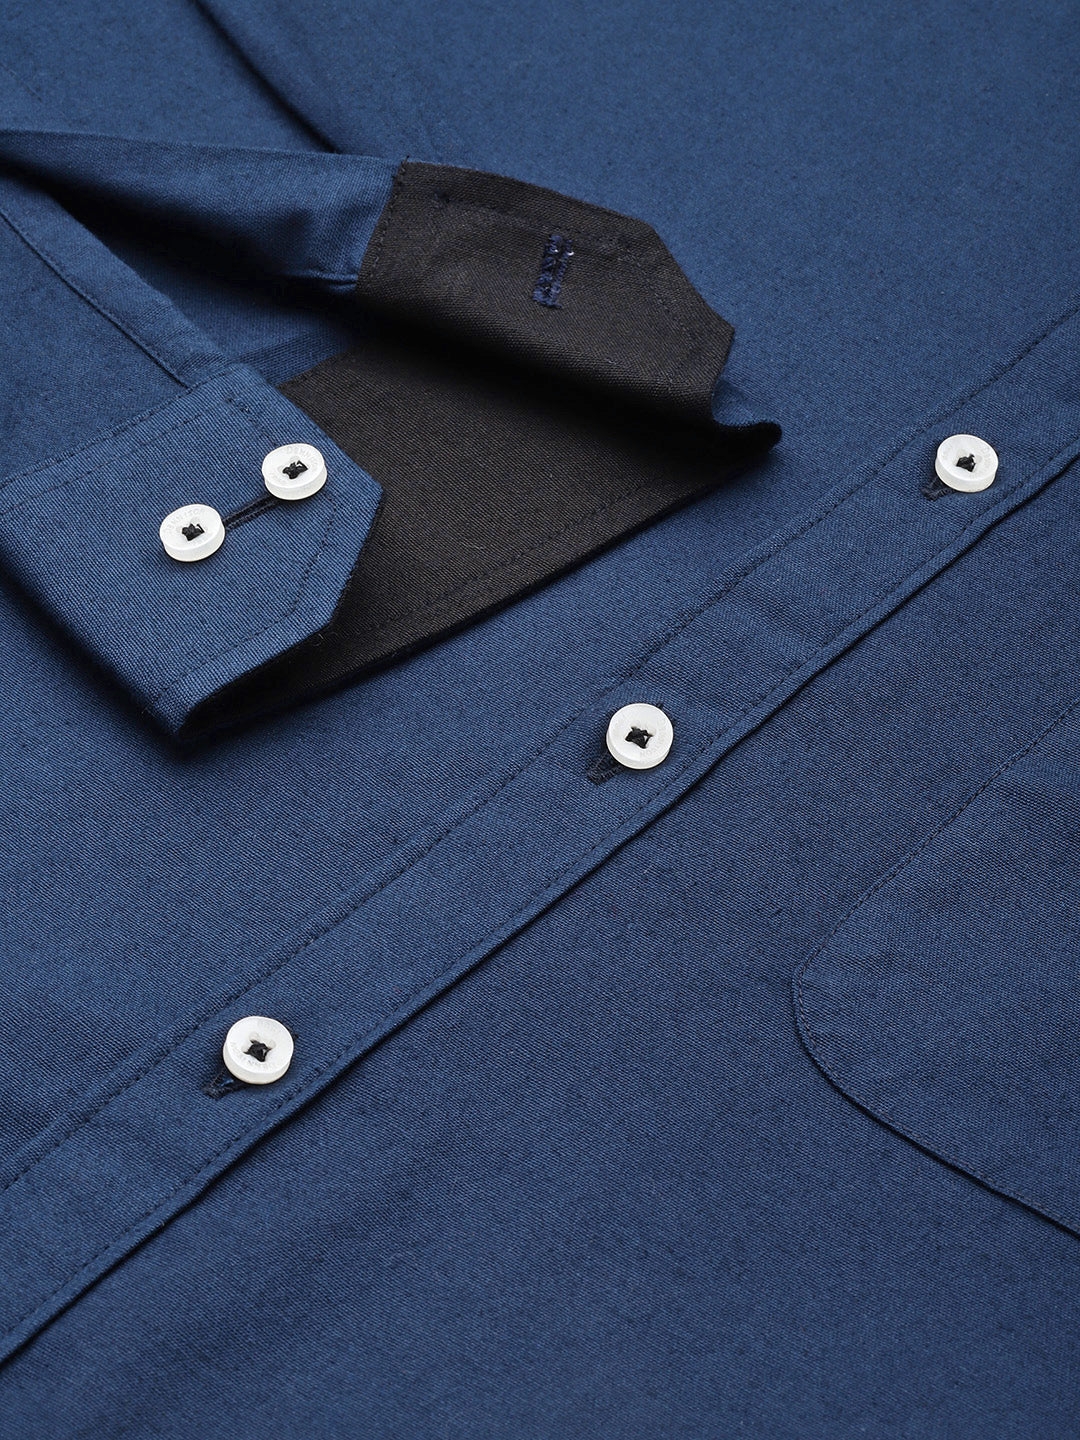 DENNISON Men Navy Blue Smart Slim Fit Casual Shirt